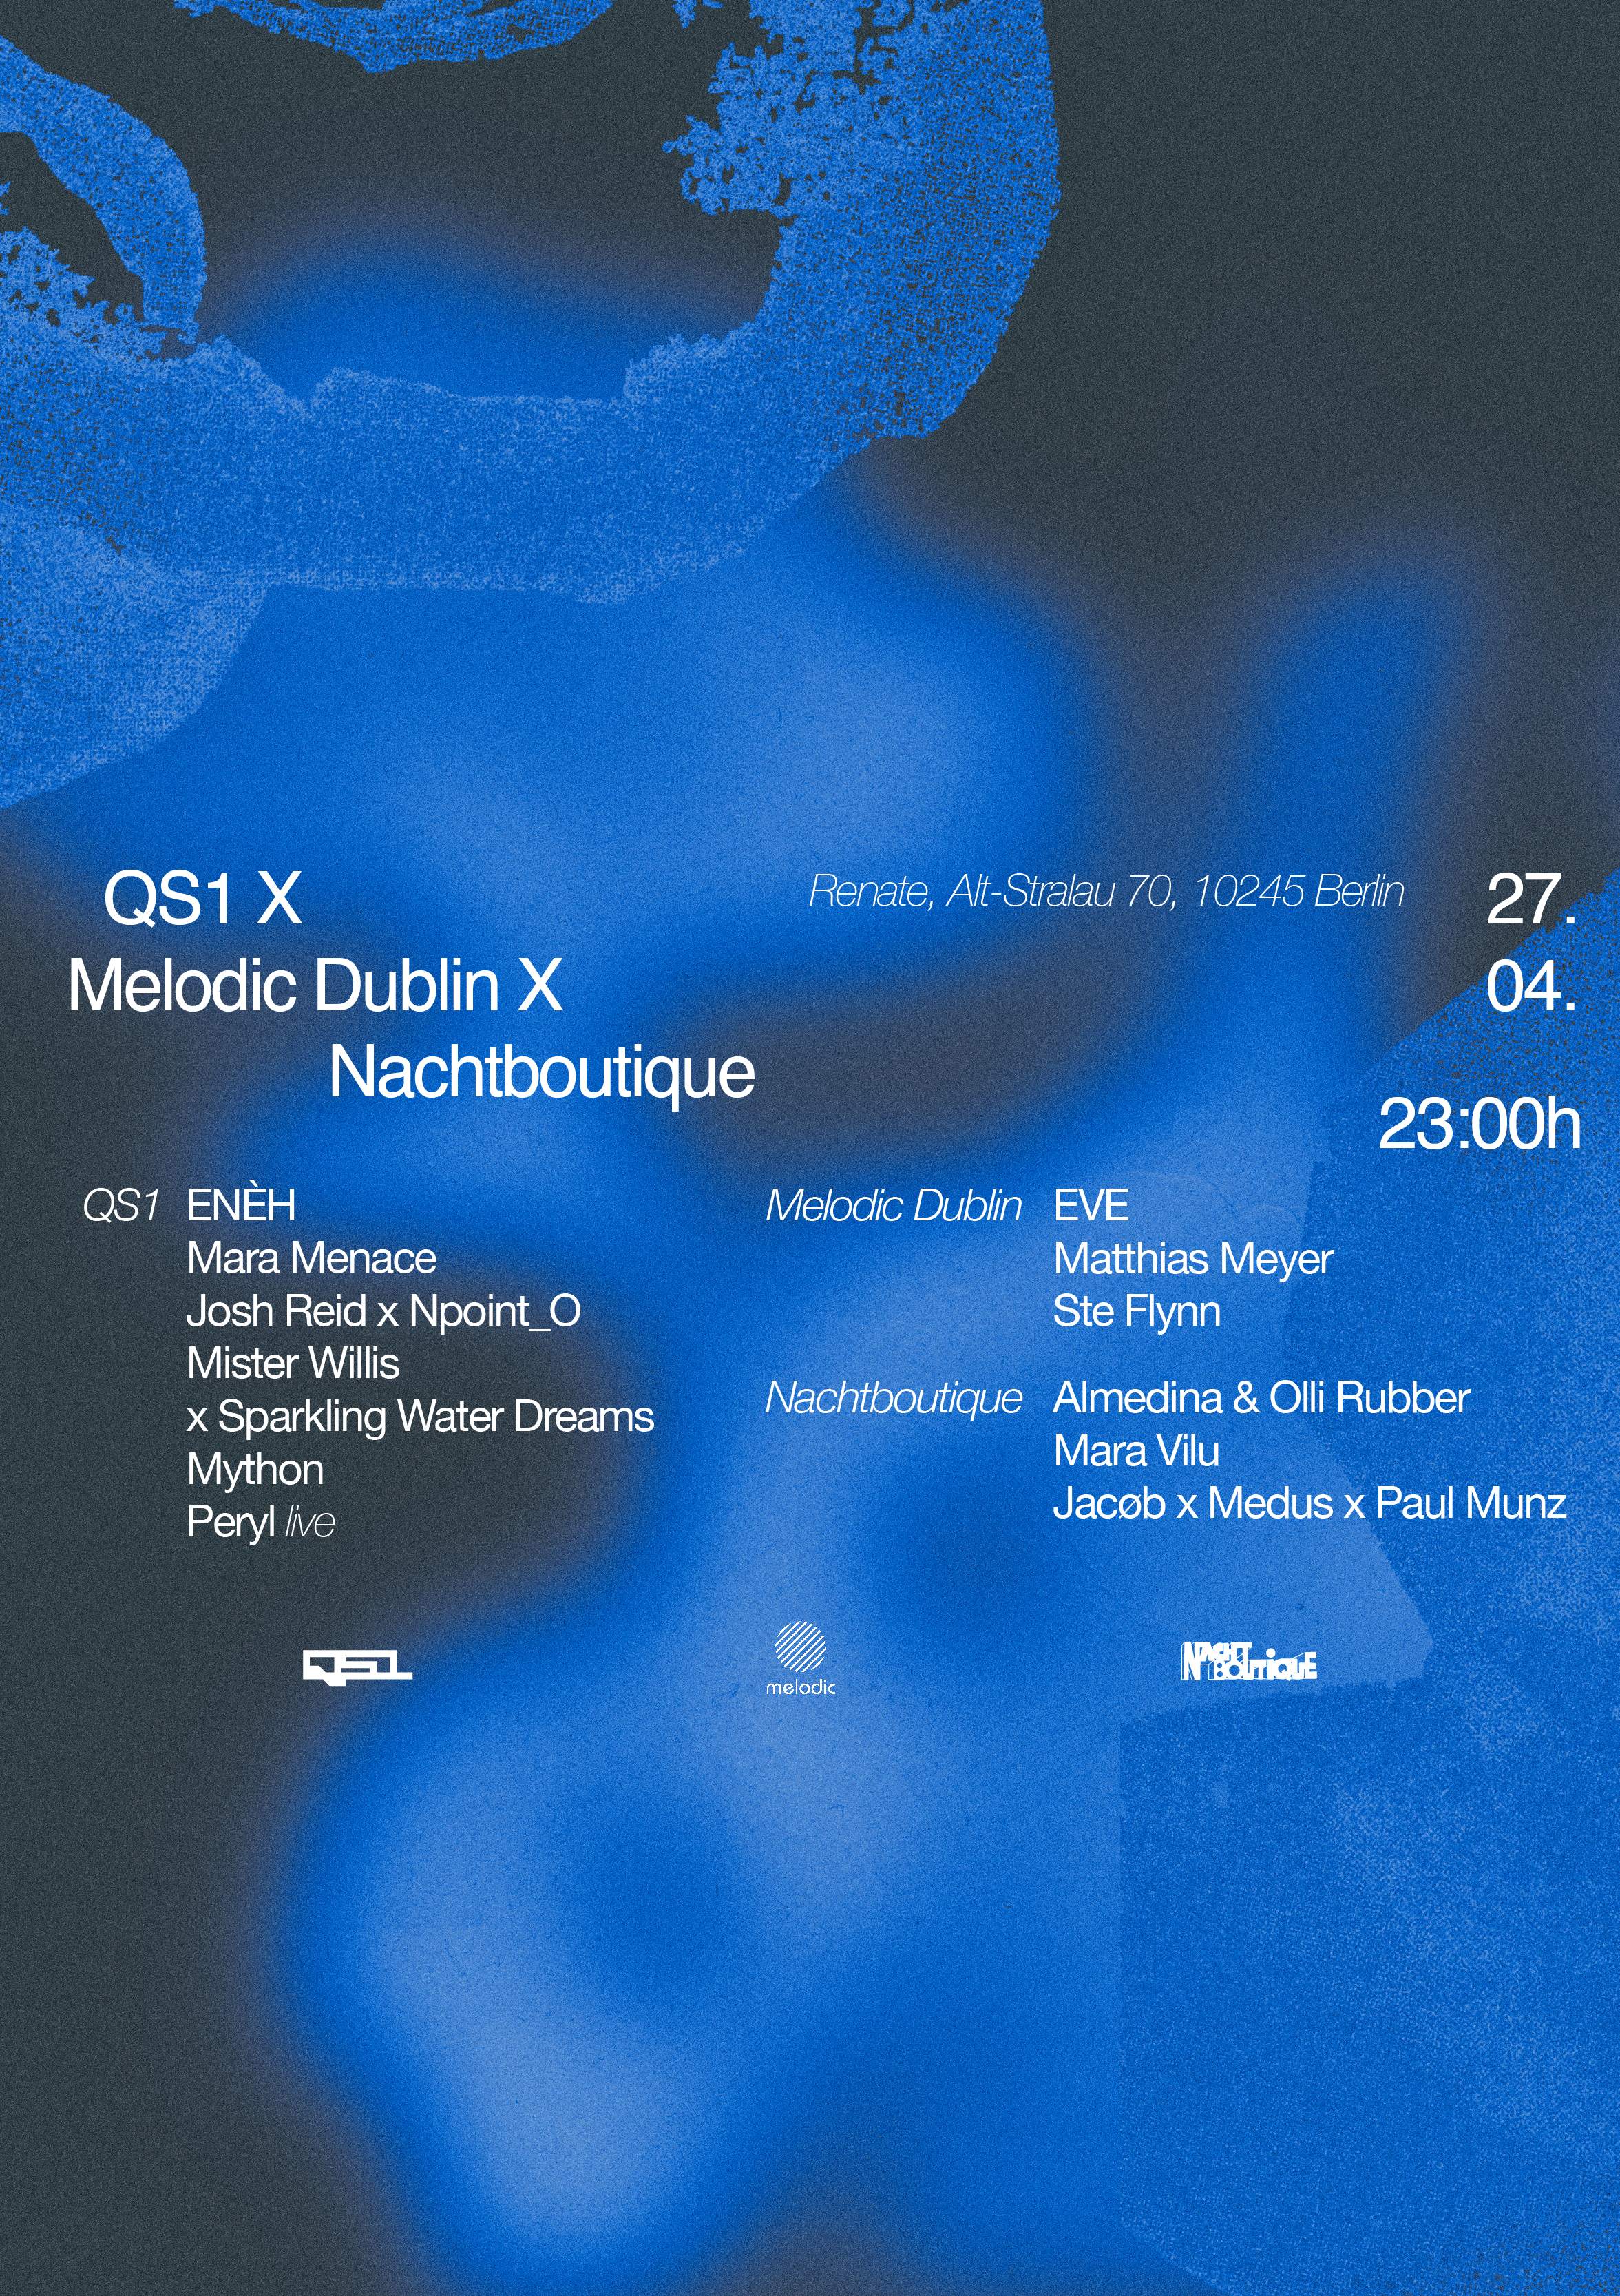 Renate X QS1 X Melodic Dublin X Nachtboutique - Página trasera